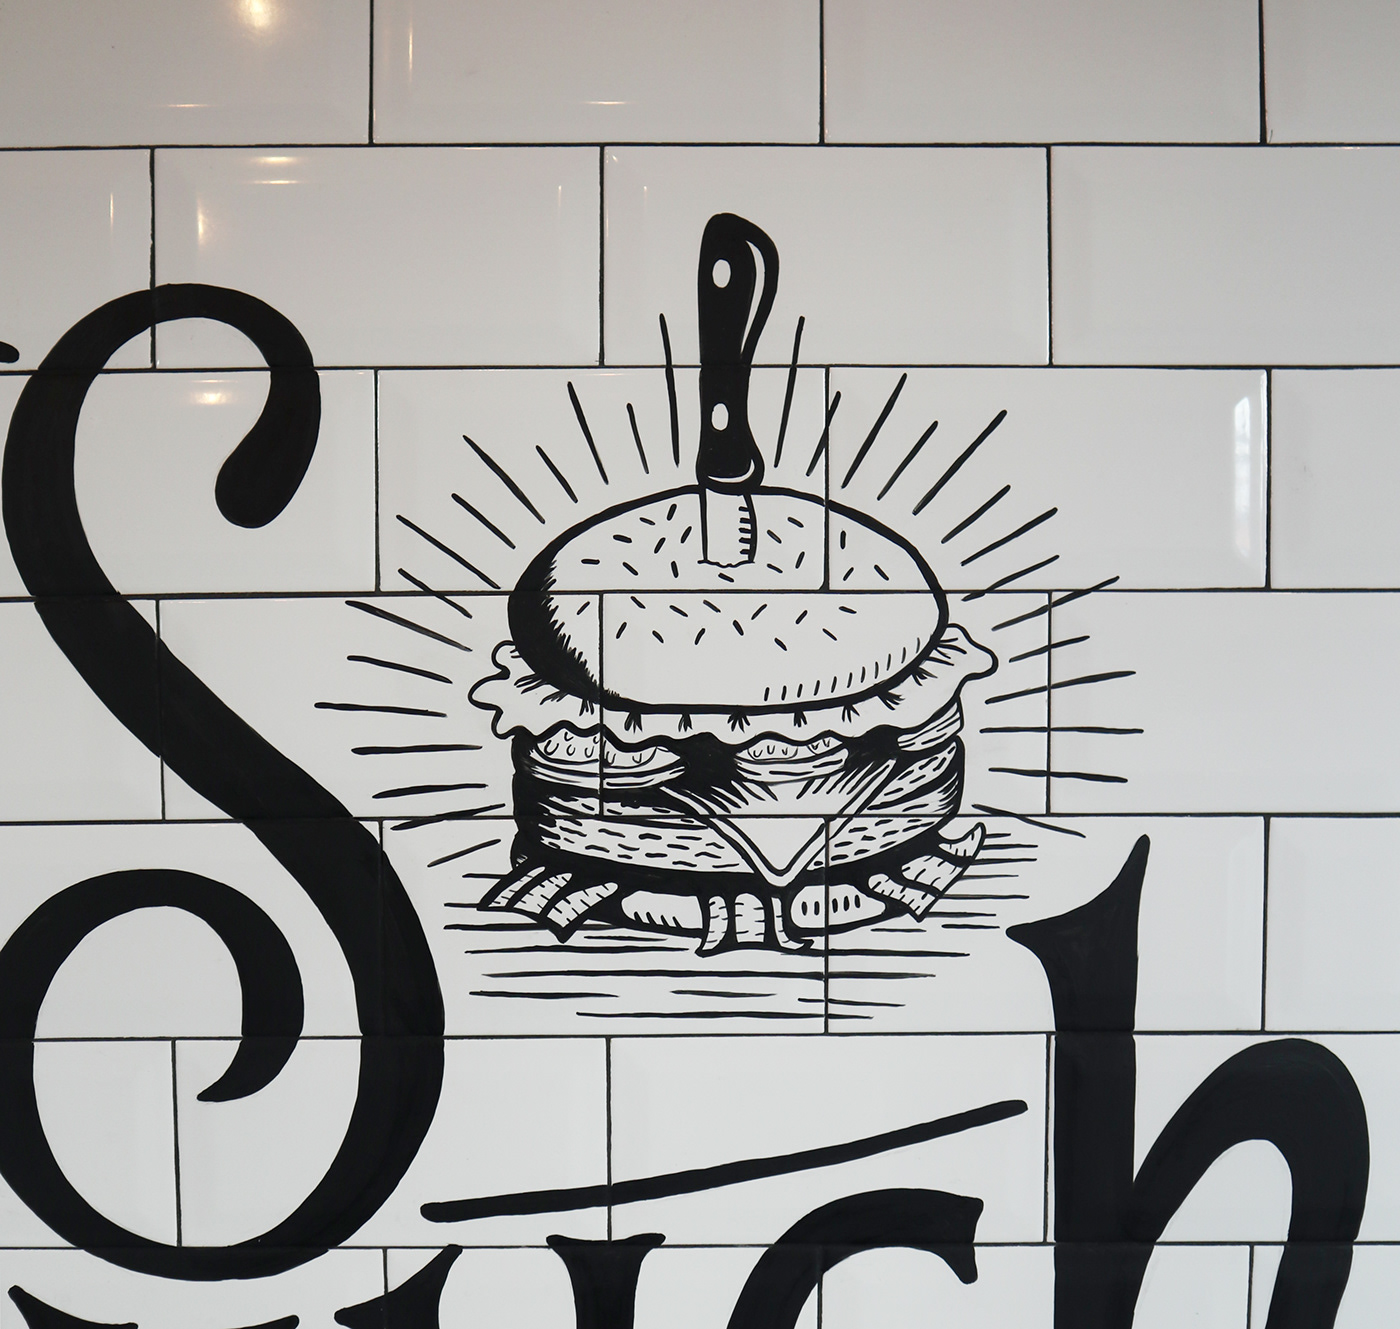 butcher handmade letras lettering Mural pinturaletreiro restaurant rustic signpainting